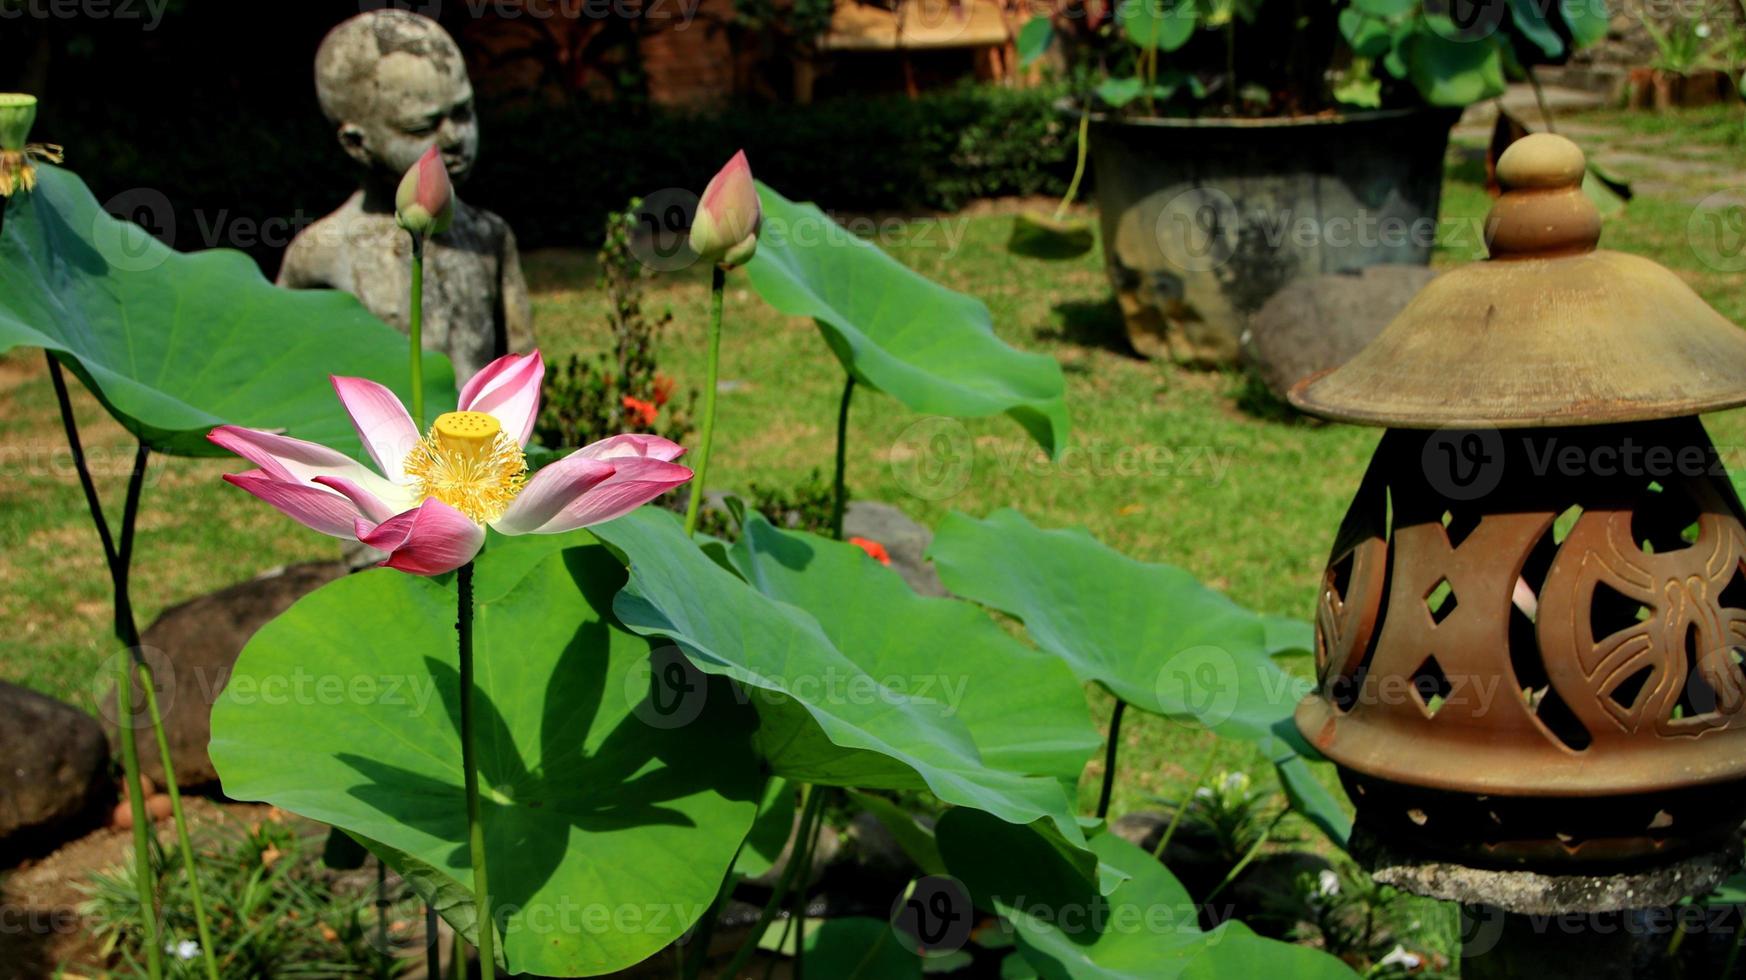 flor de loto natural florece en un hermoso jardín foto